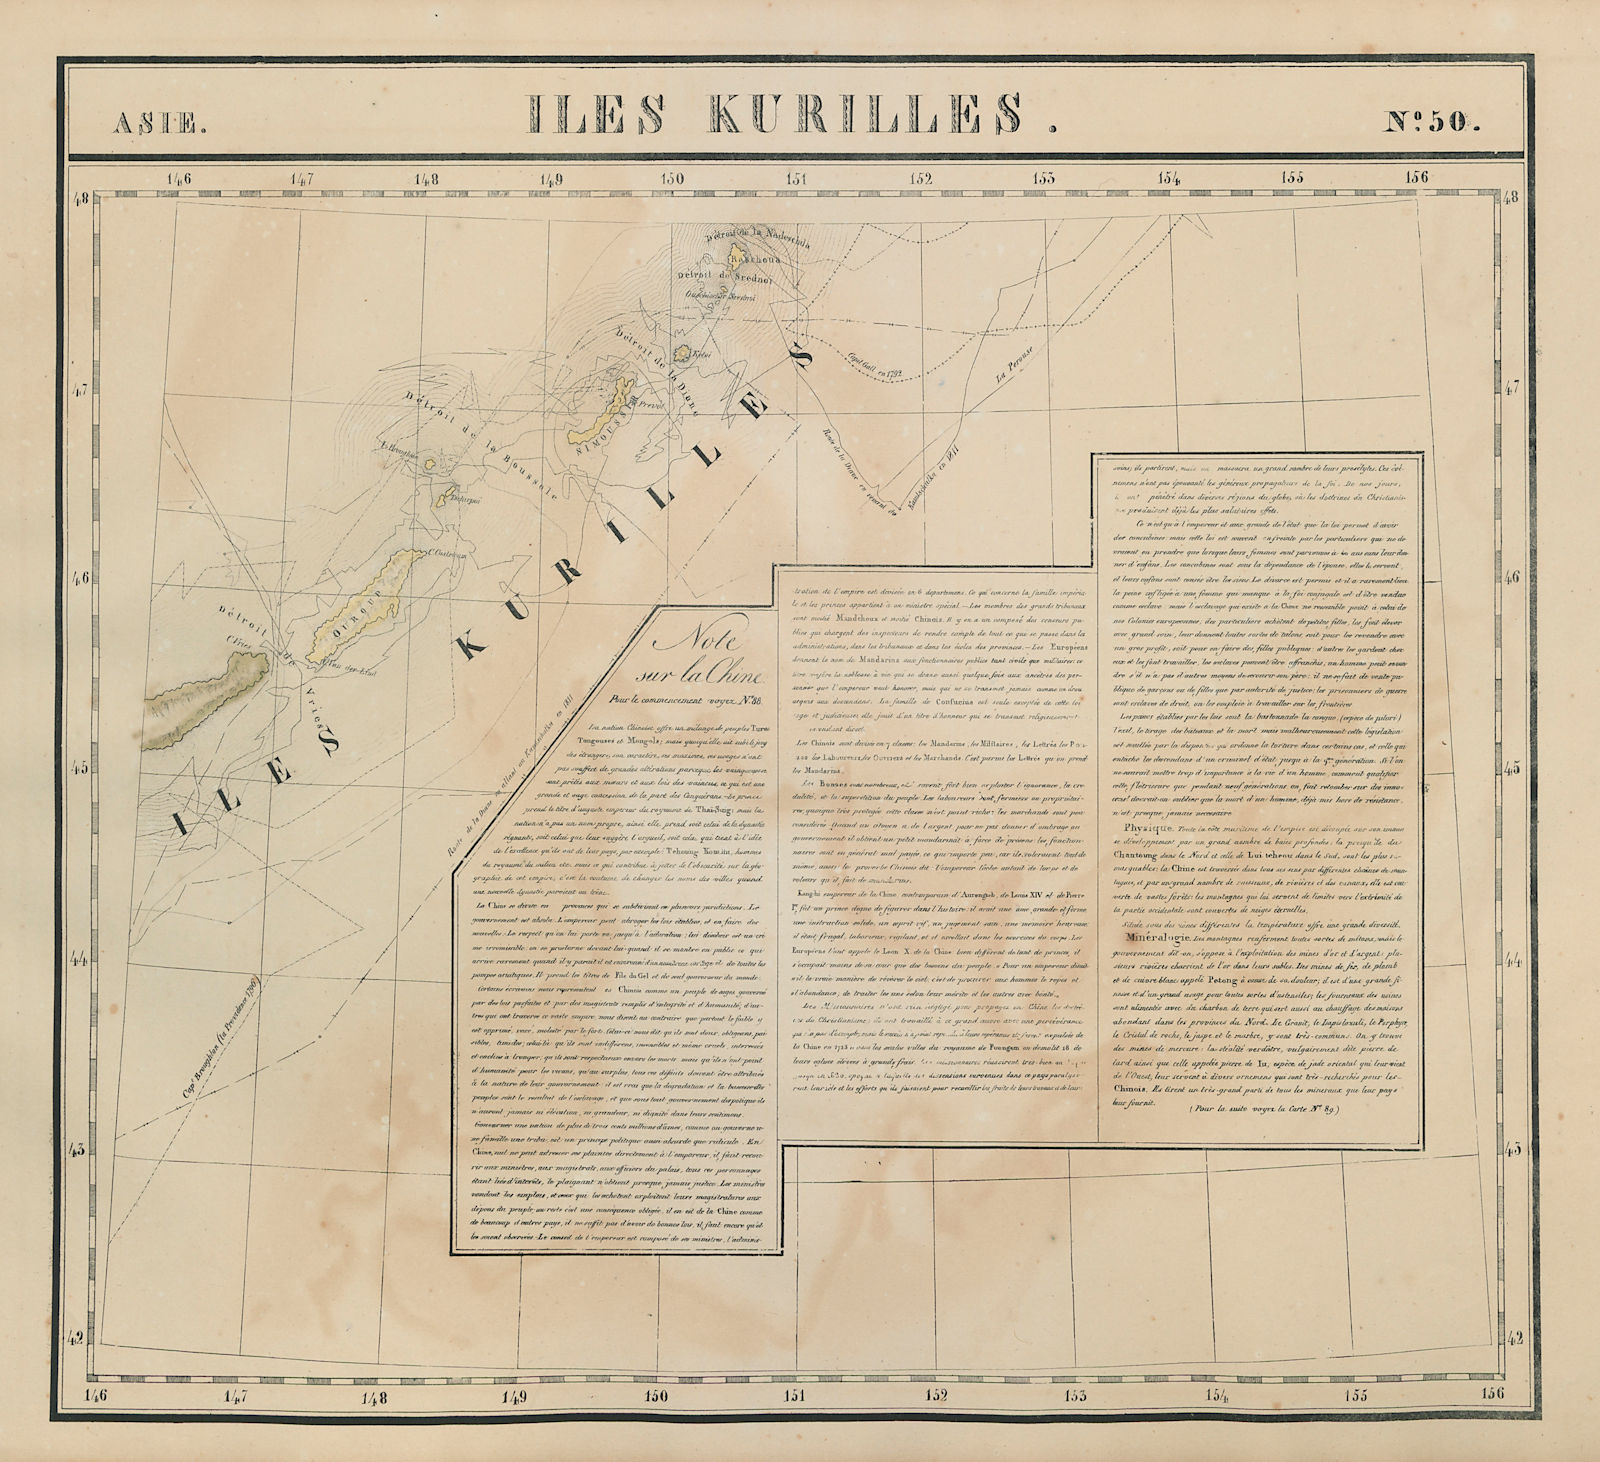 Associate Product Asie. Iles Kurilles #50 Southern Kurile islands. Russia. VANDERMAELEN 1827 map